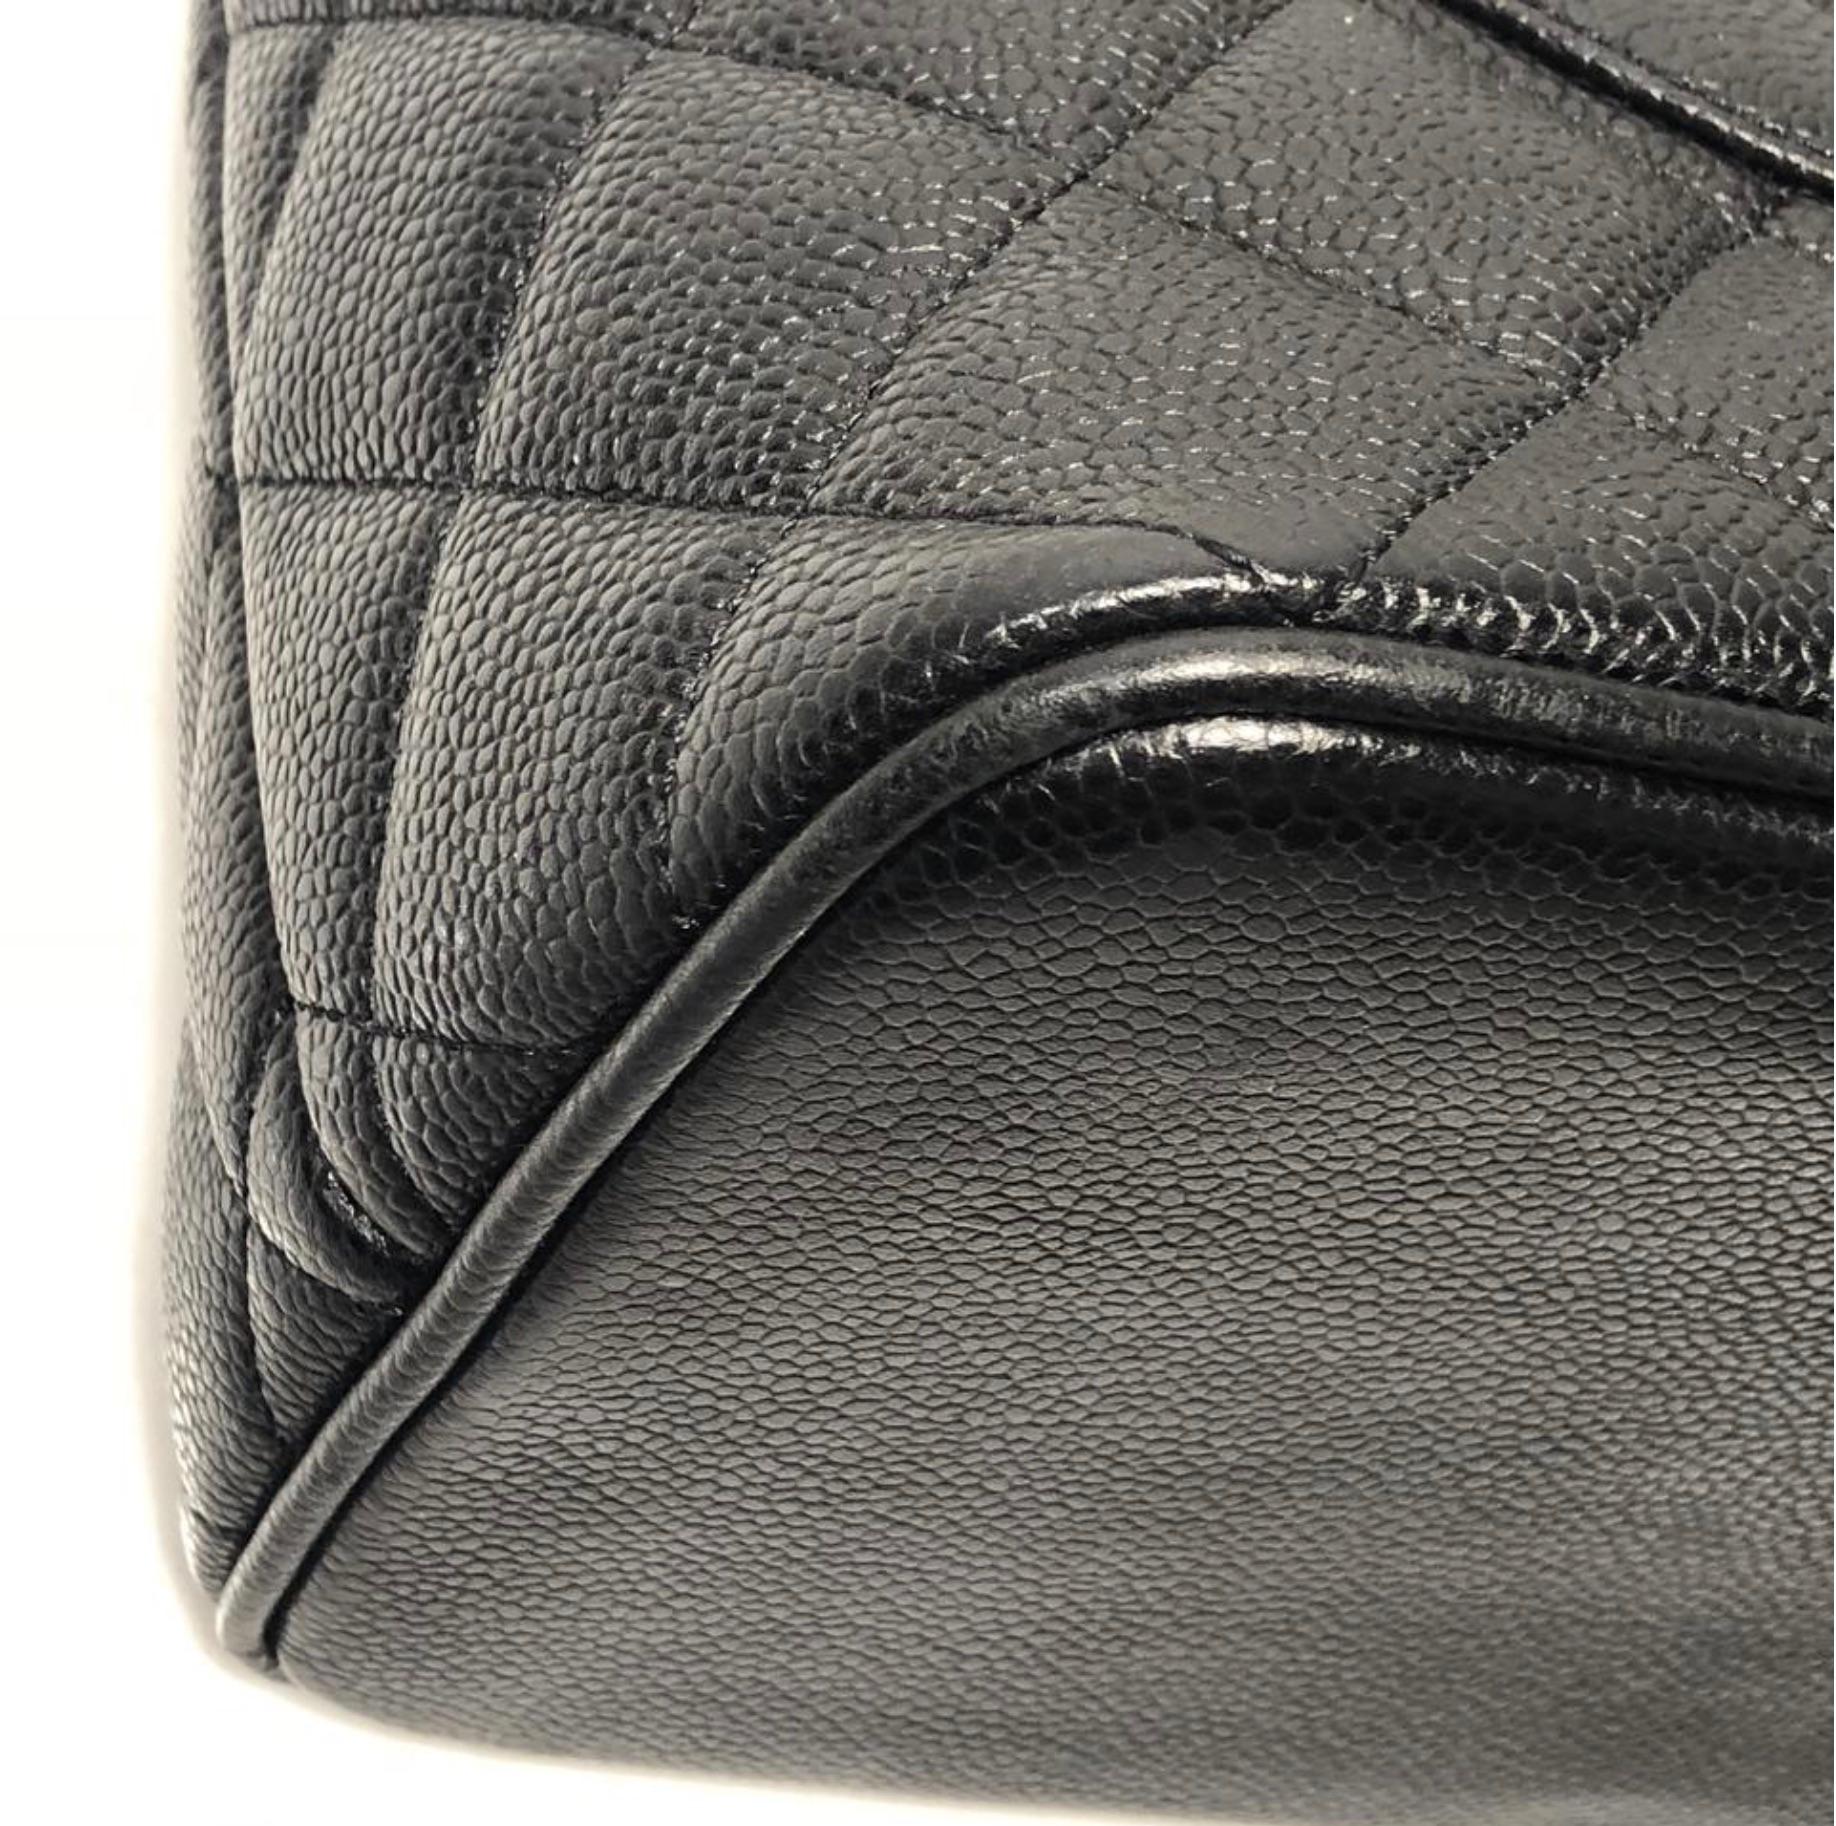 Chanel Caviar Leather Medallion with Silver Hardware in Black Shoulder Handbag For Sale 3